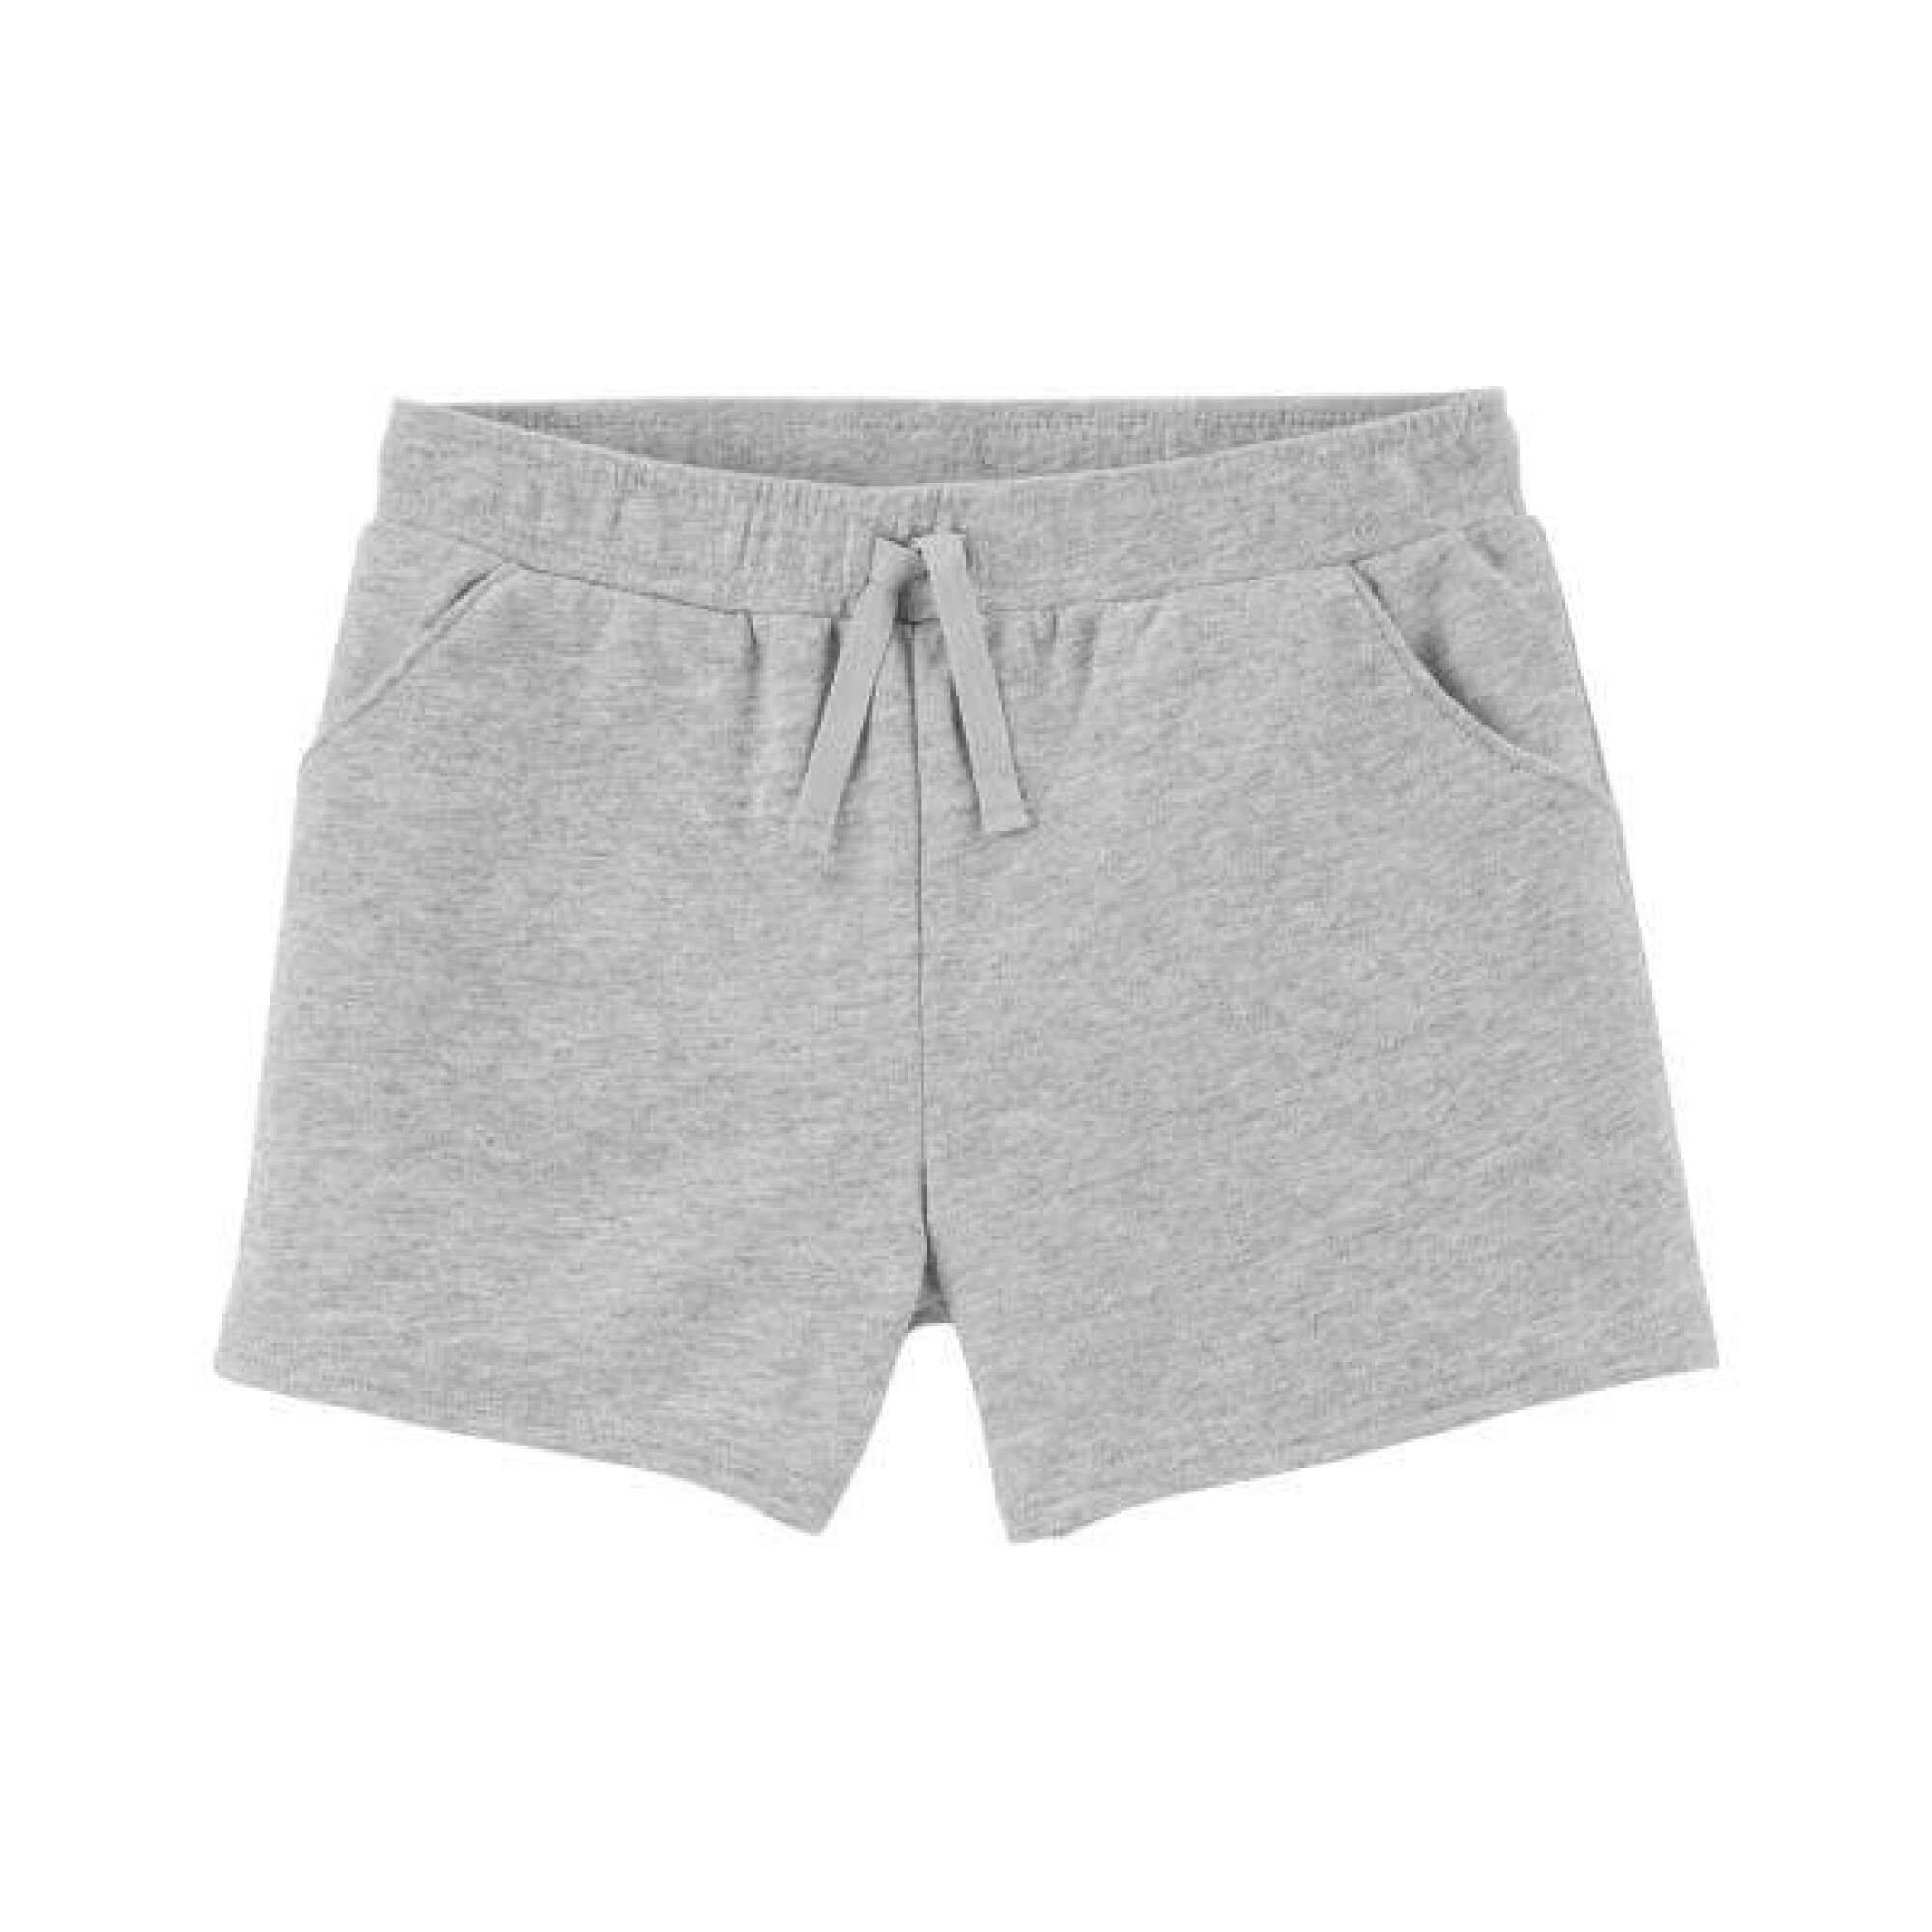 Carters Grey Shorts